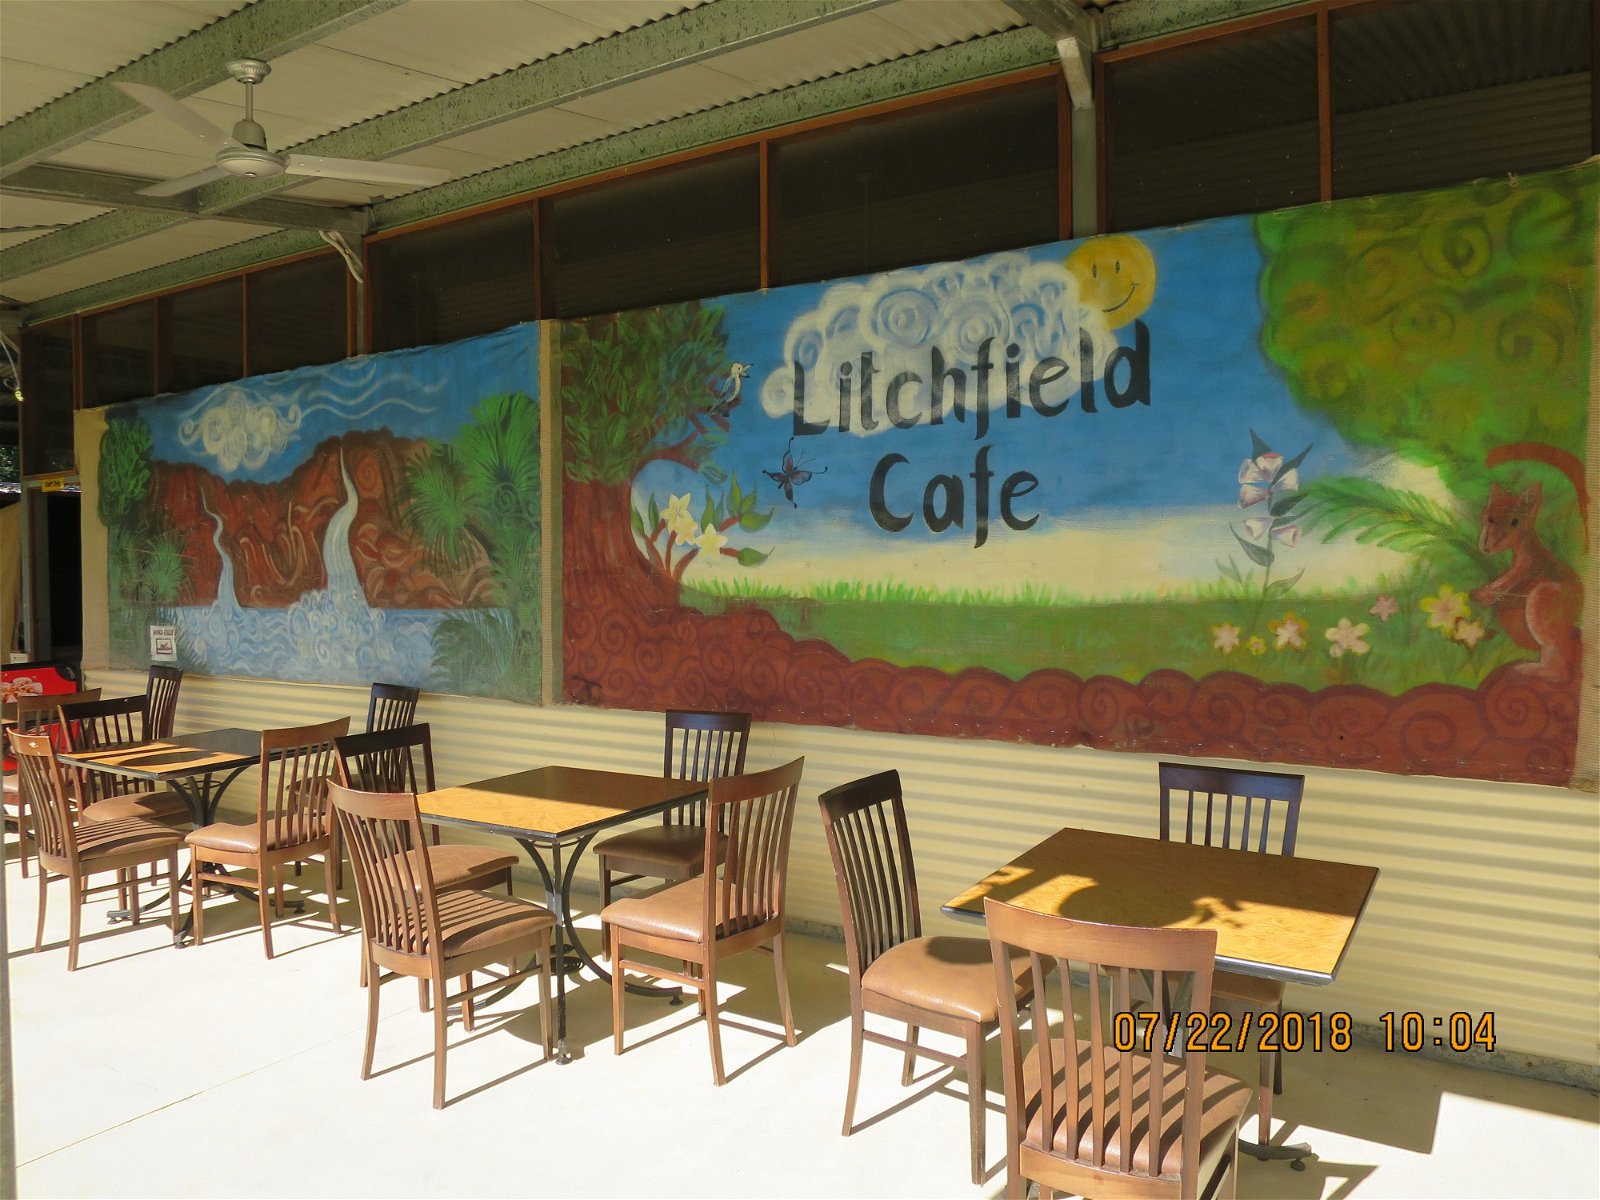 Litchfield Cafe